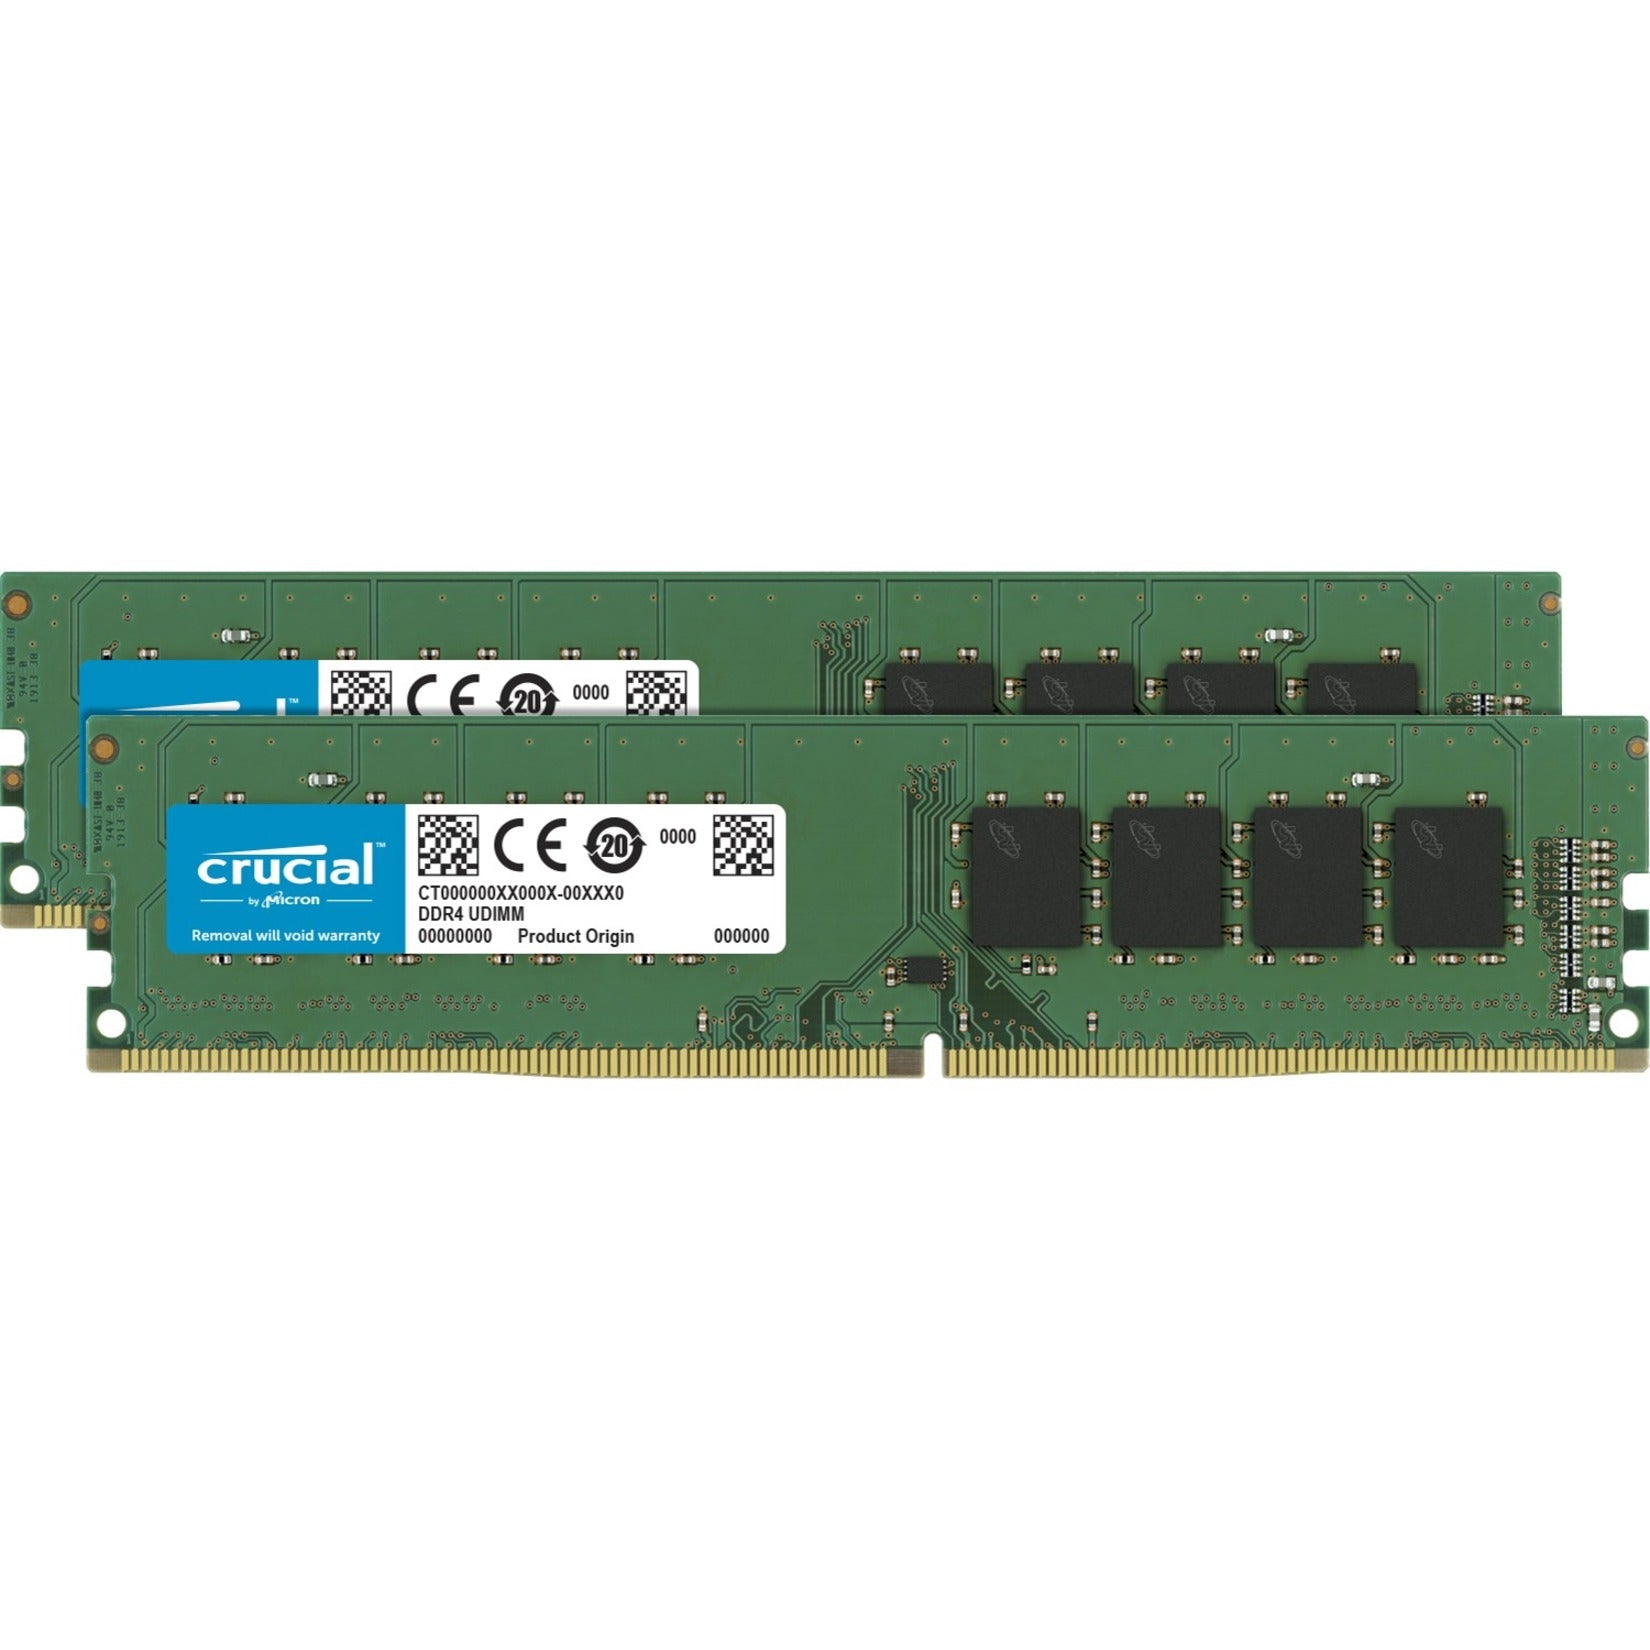 Crucial CT2K8G4DFRA266 16GB (2 x 8GB) DDR4 SDRAM Memory Kit, High Performance RAM for Desktop PC